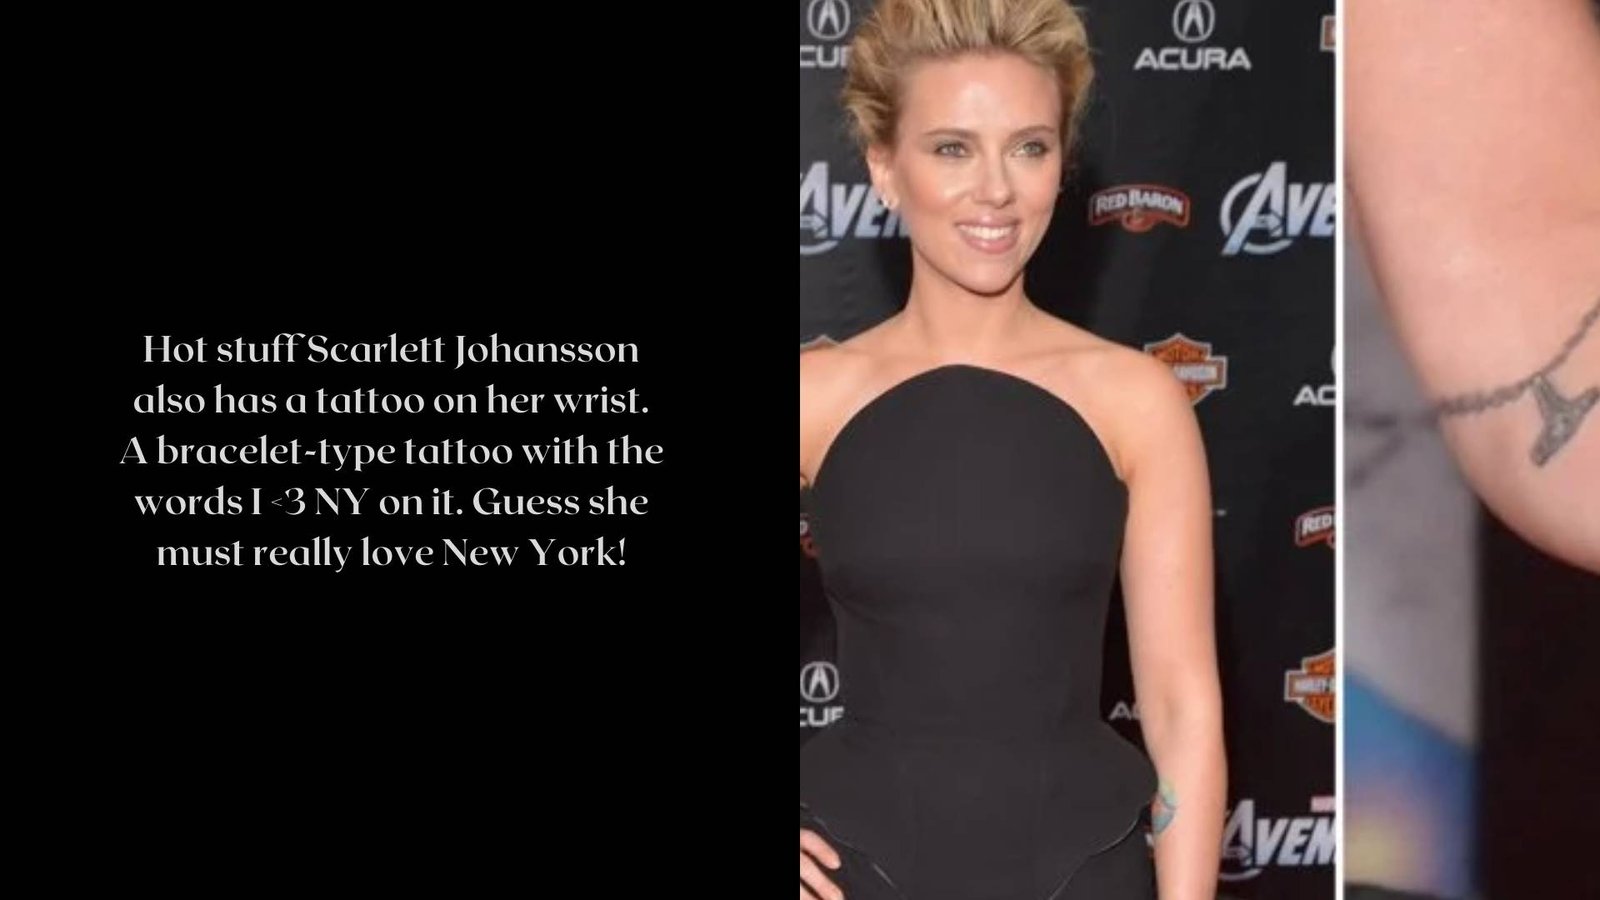 Scarlett Johansson’s Tattoos & Their Meanings